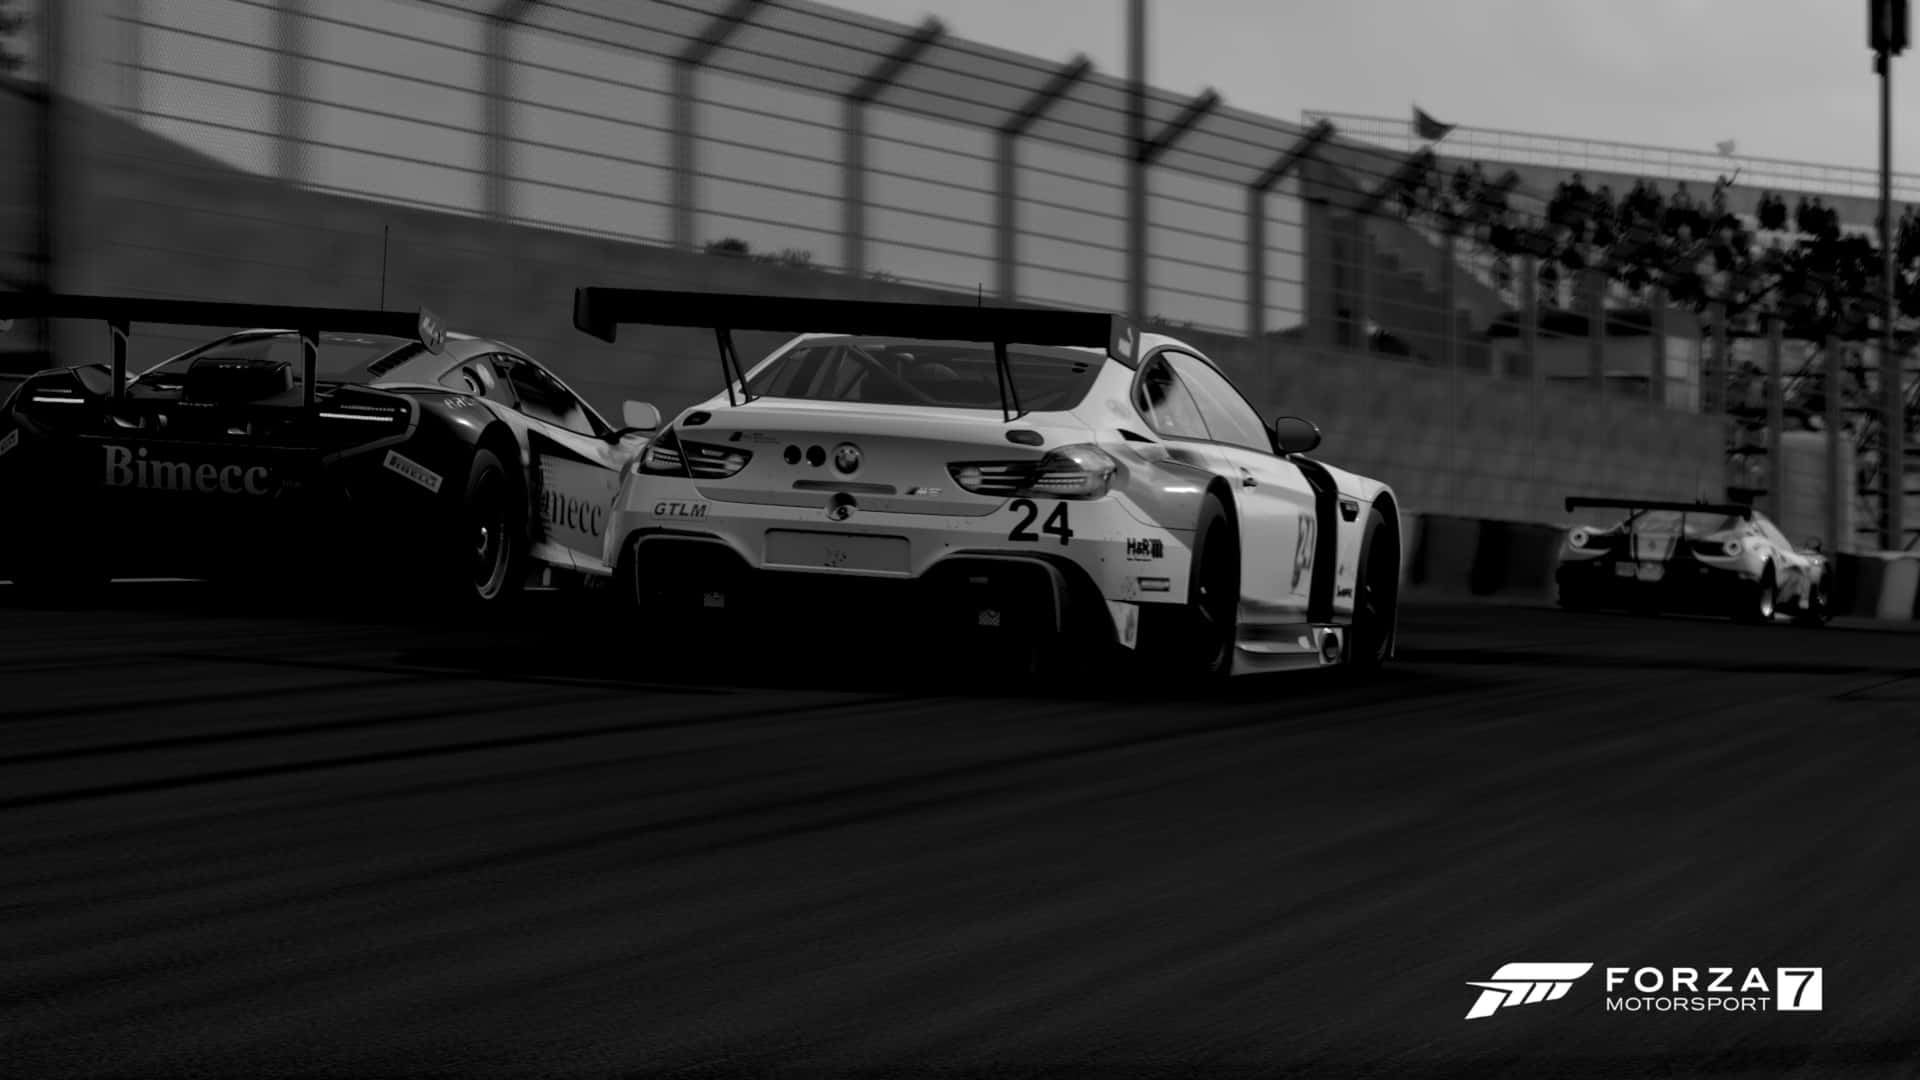 4k Forza Motorsport 7 Racing Bmw M6 Gt3 Background